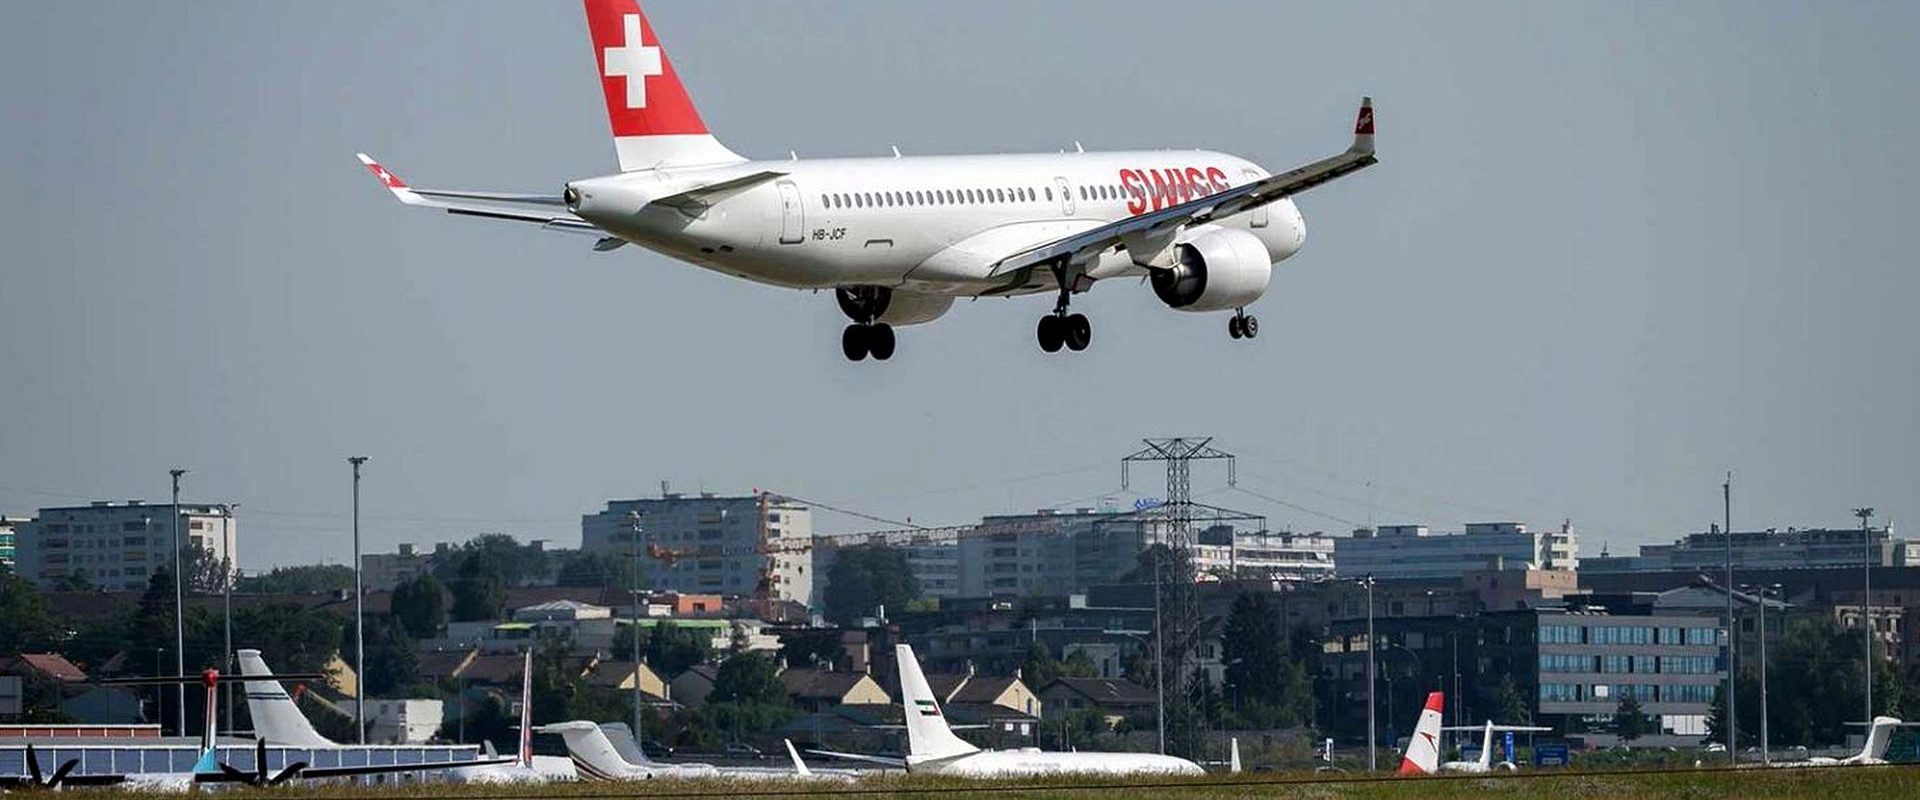 Swiss отменила около 100 рейсов из-за Pratt & Whitney